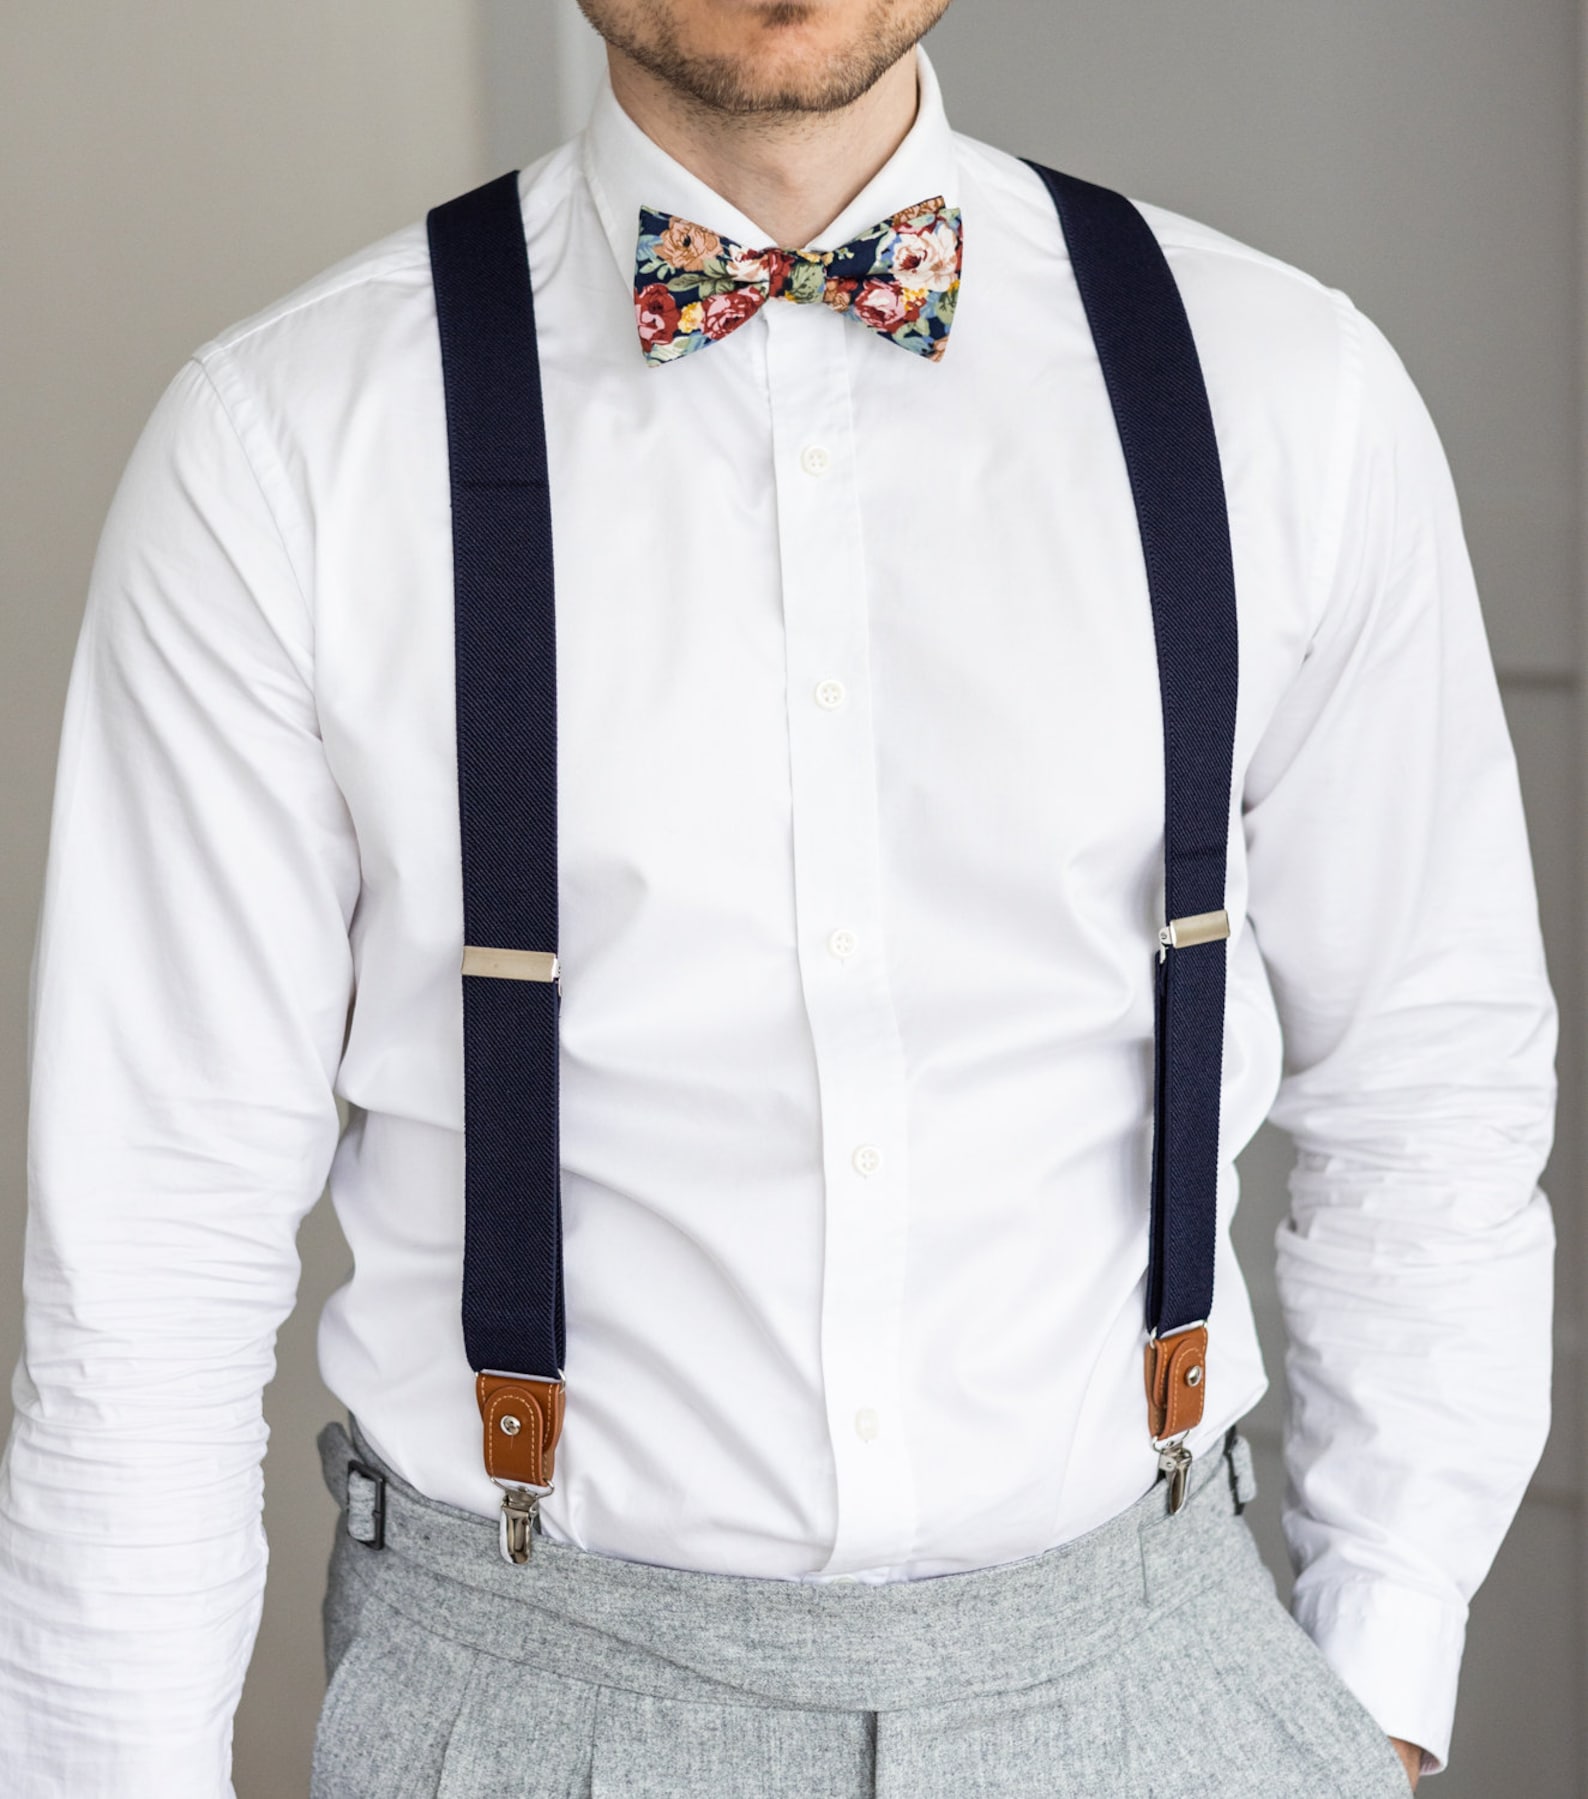 Navy Blue Suspenders for Men Brown Button Suspenders Wedding - Etsy